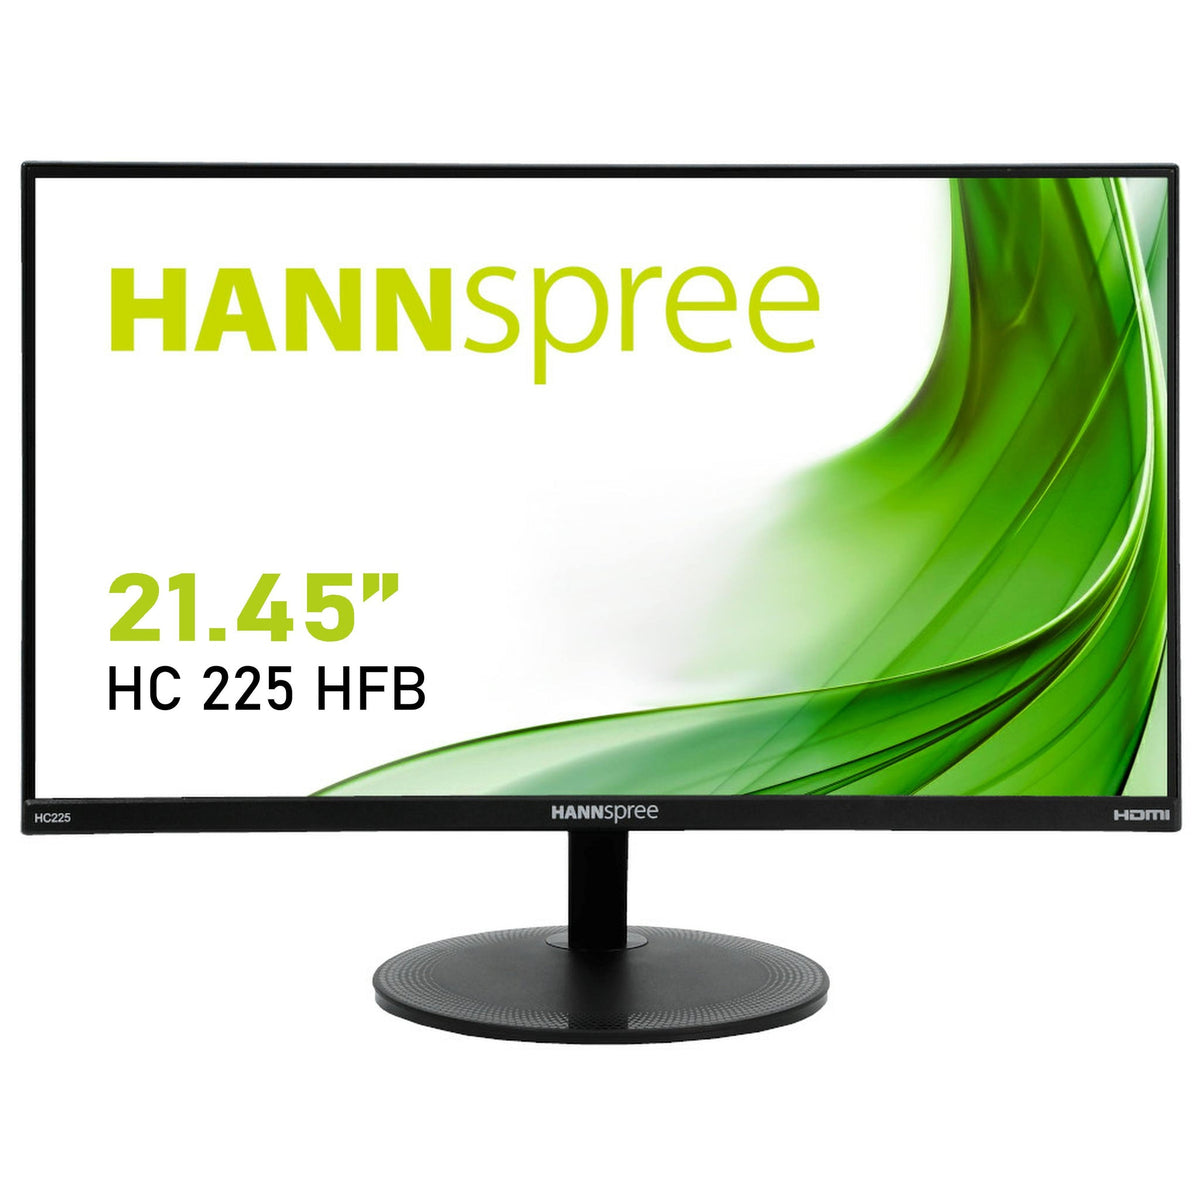 Hannspree HC 225 HFB 22" Full HD Monitor | 1920 x 1080 60Hz HDMI VGA